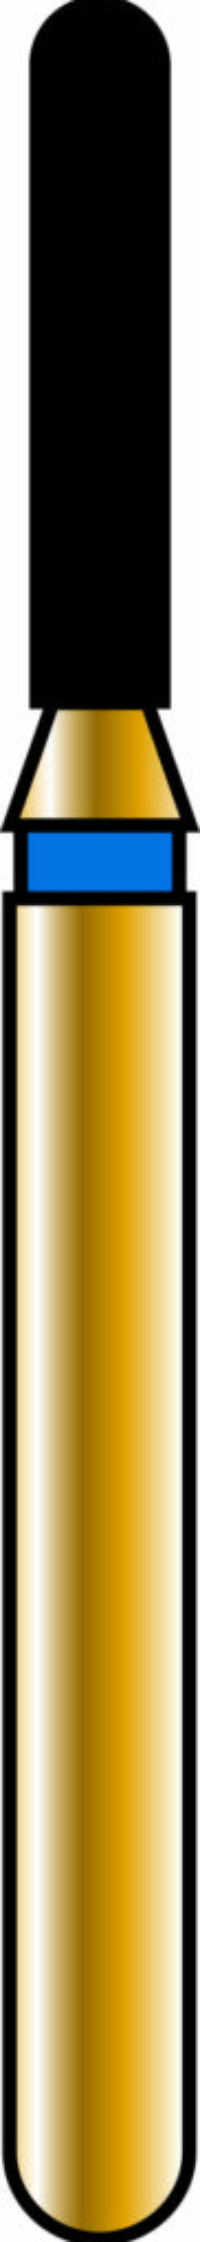 Round End Cylinder 12-6mm Gold Diamond Bur - Coarse Grit